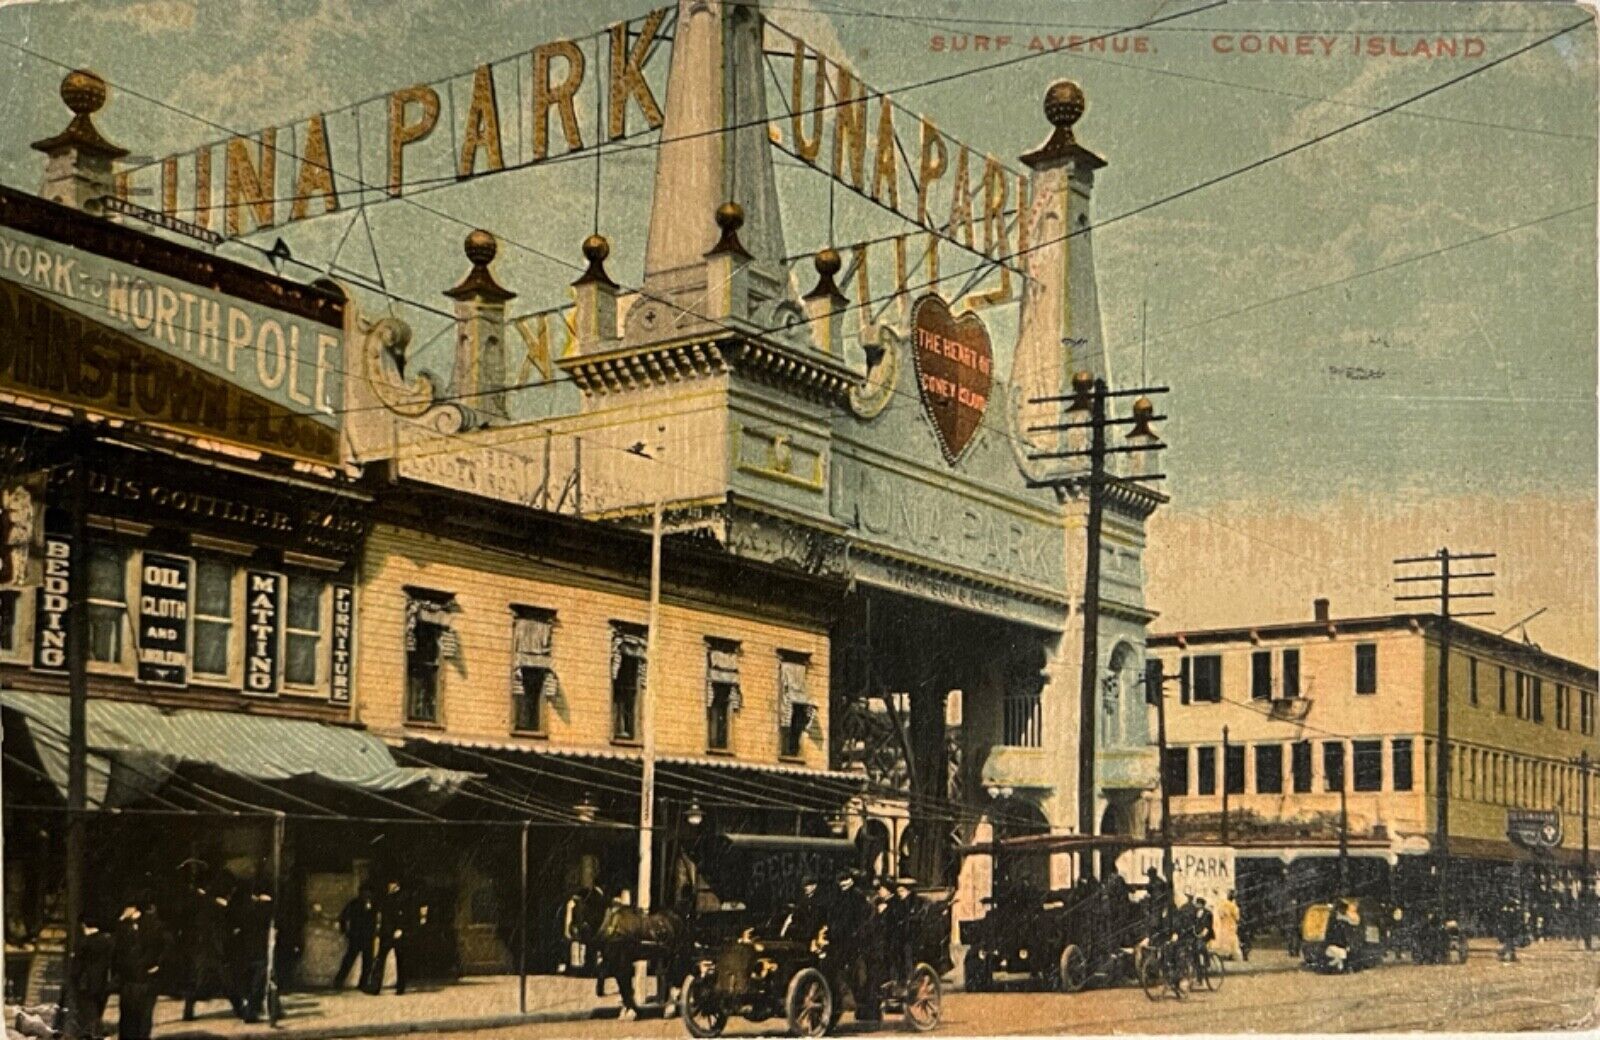 Coney Island Luna Park Surf Avenue Old Cars New York Antique Postcard c1910